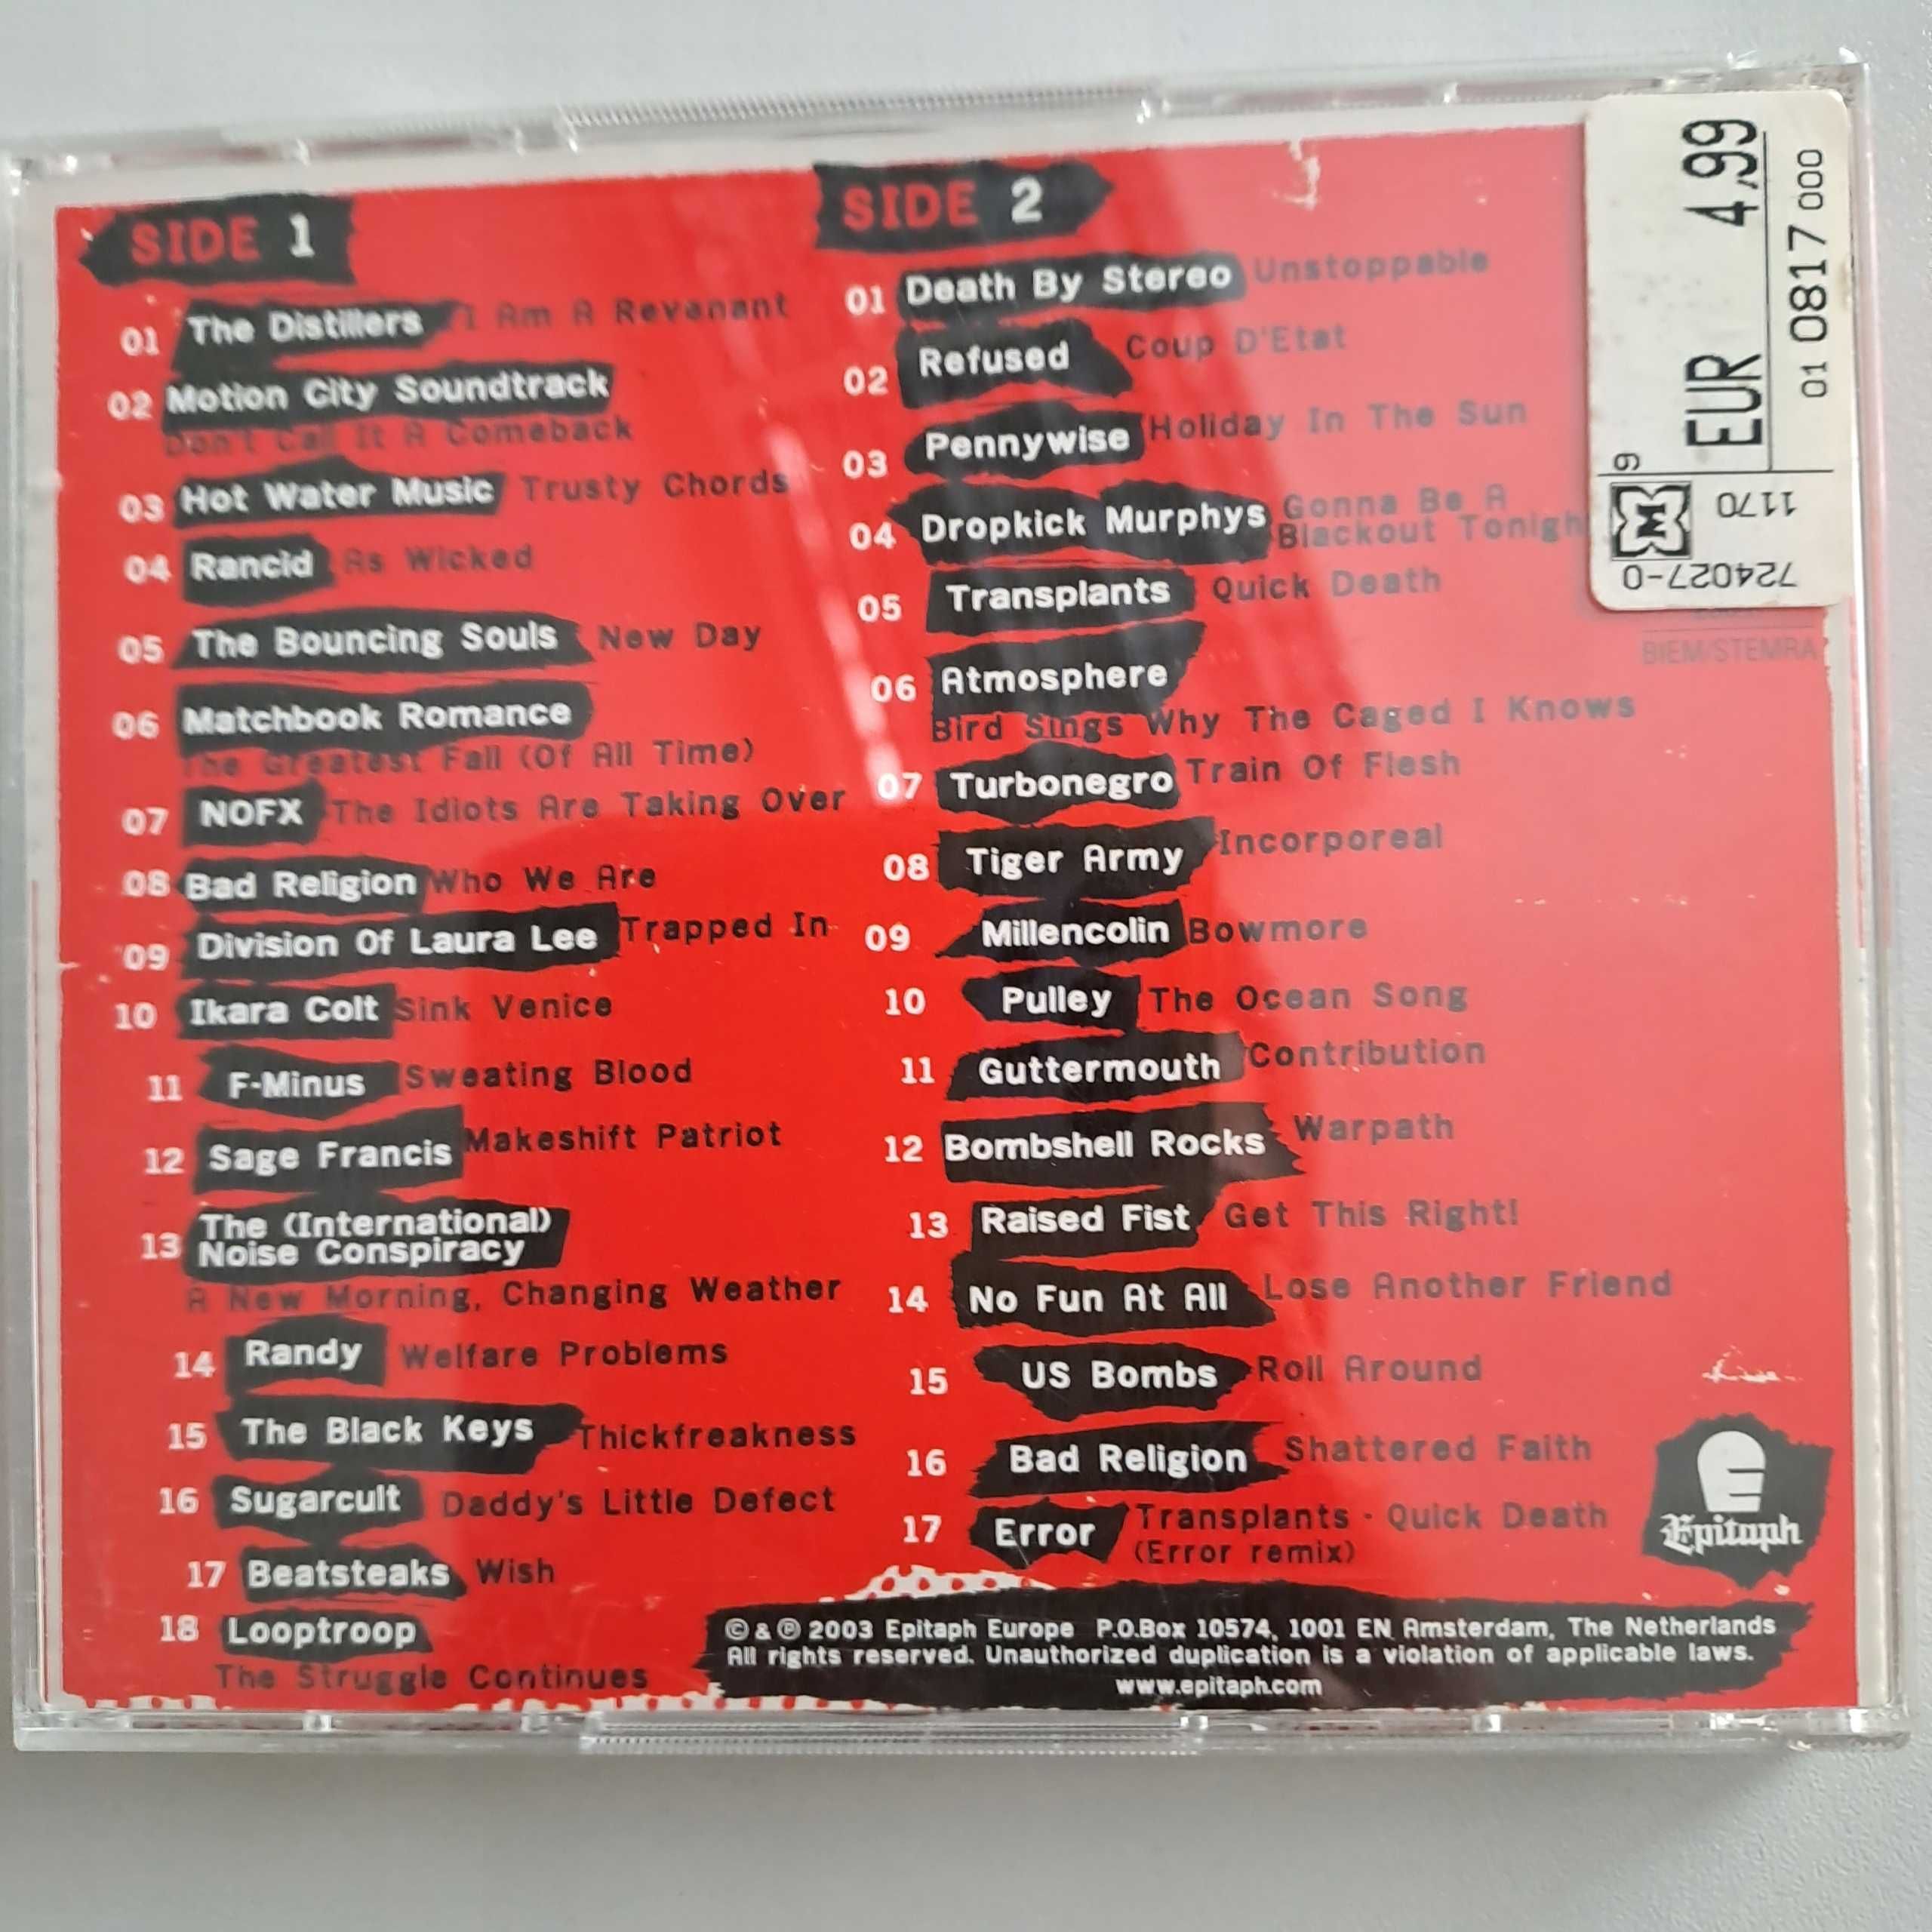 PUNK-O-RAMA 8 - NOFX Rancid Bad Religion Turbonegro Refused - 2CD